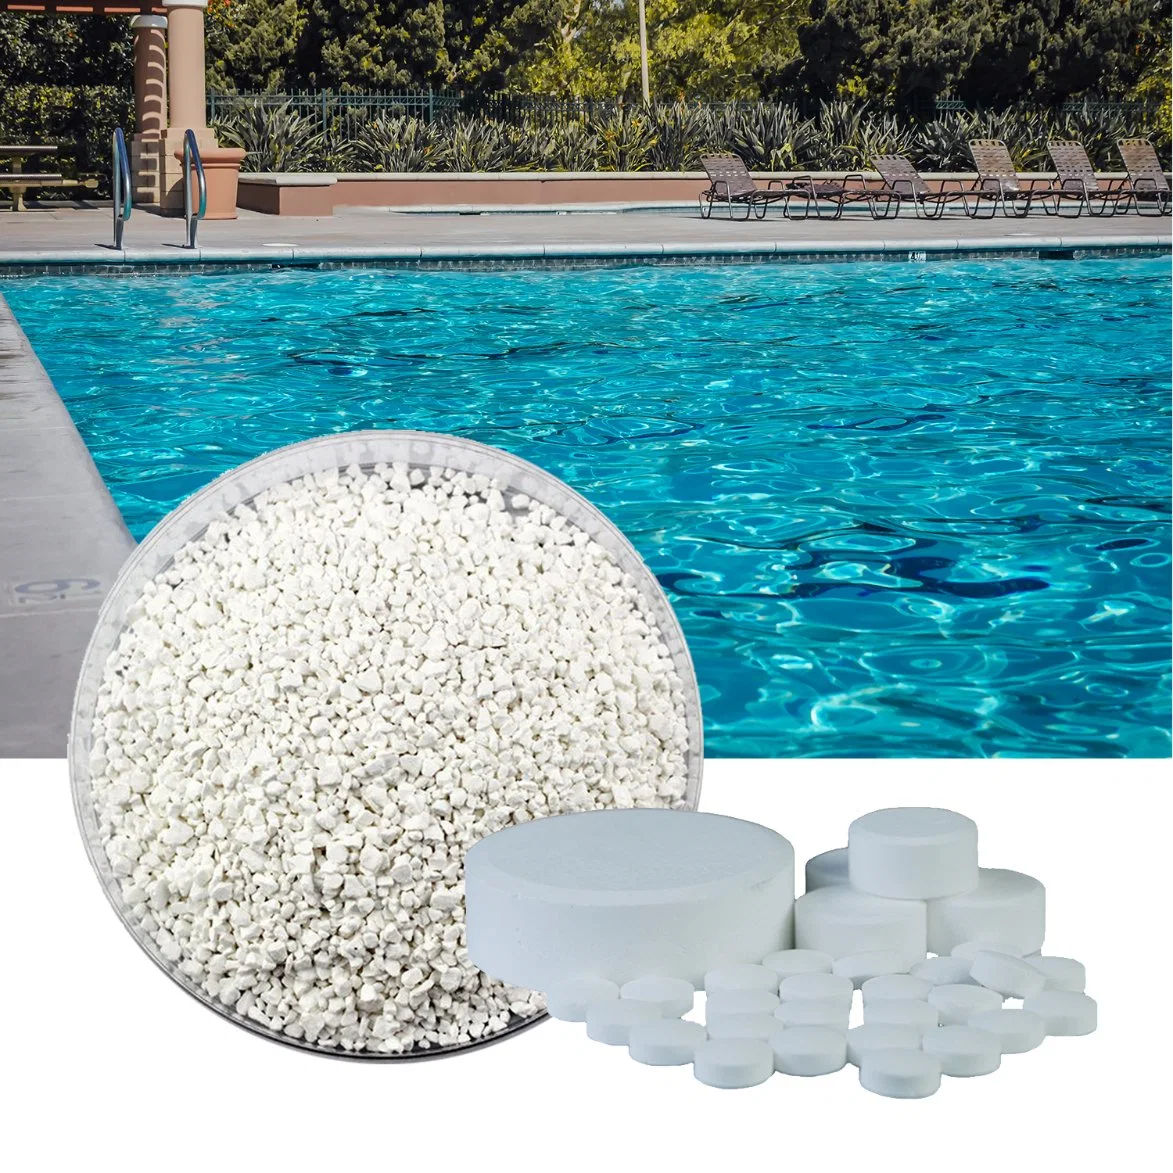 TCCA Trichloroisocyanuric Acid Trichloro Acid Swimming Pool Chlorine bleach water treatment granular